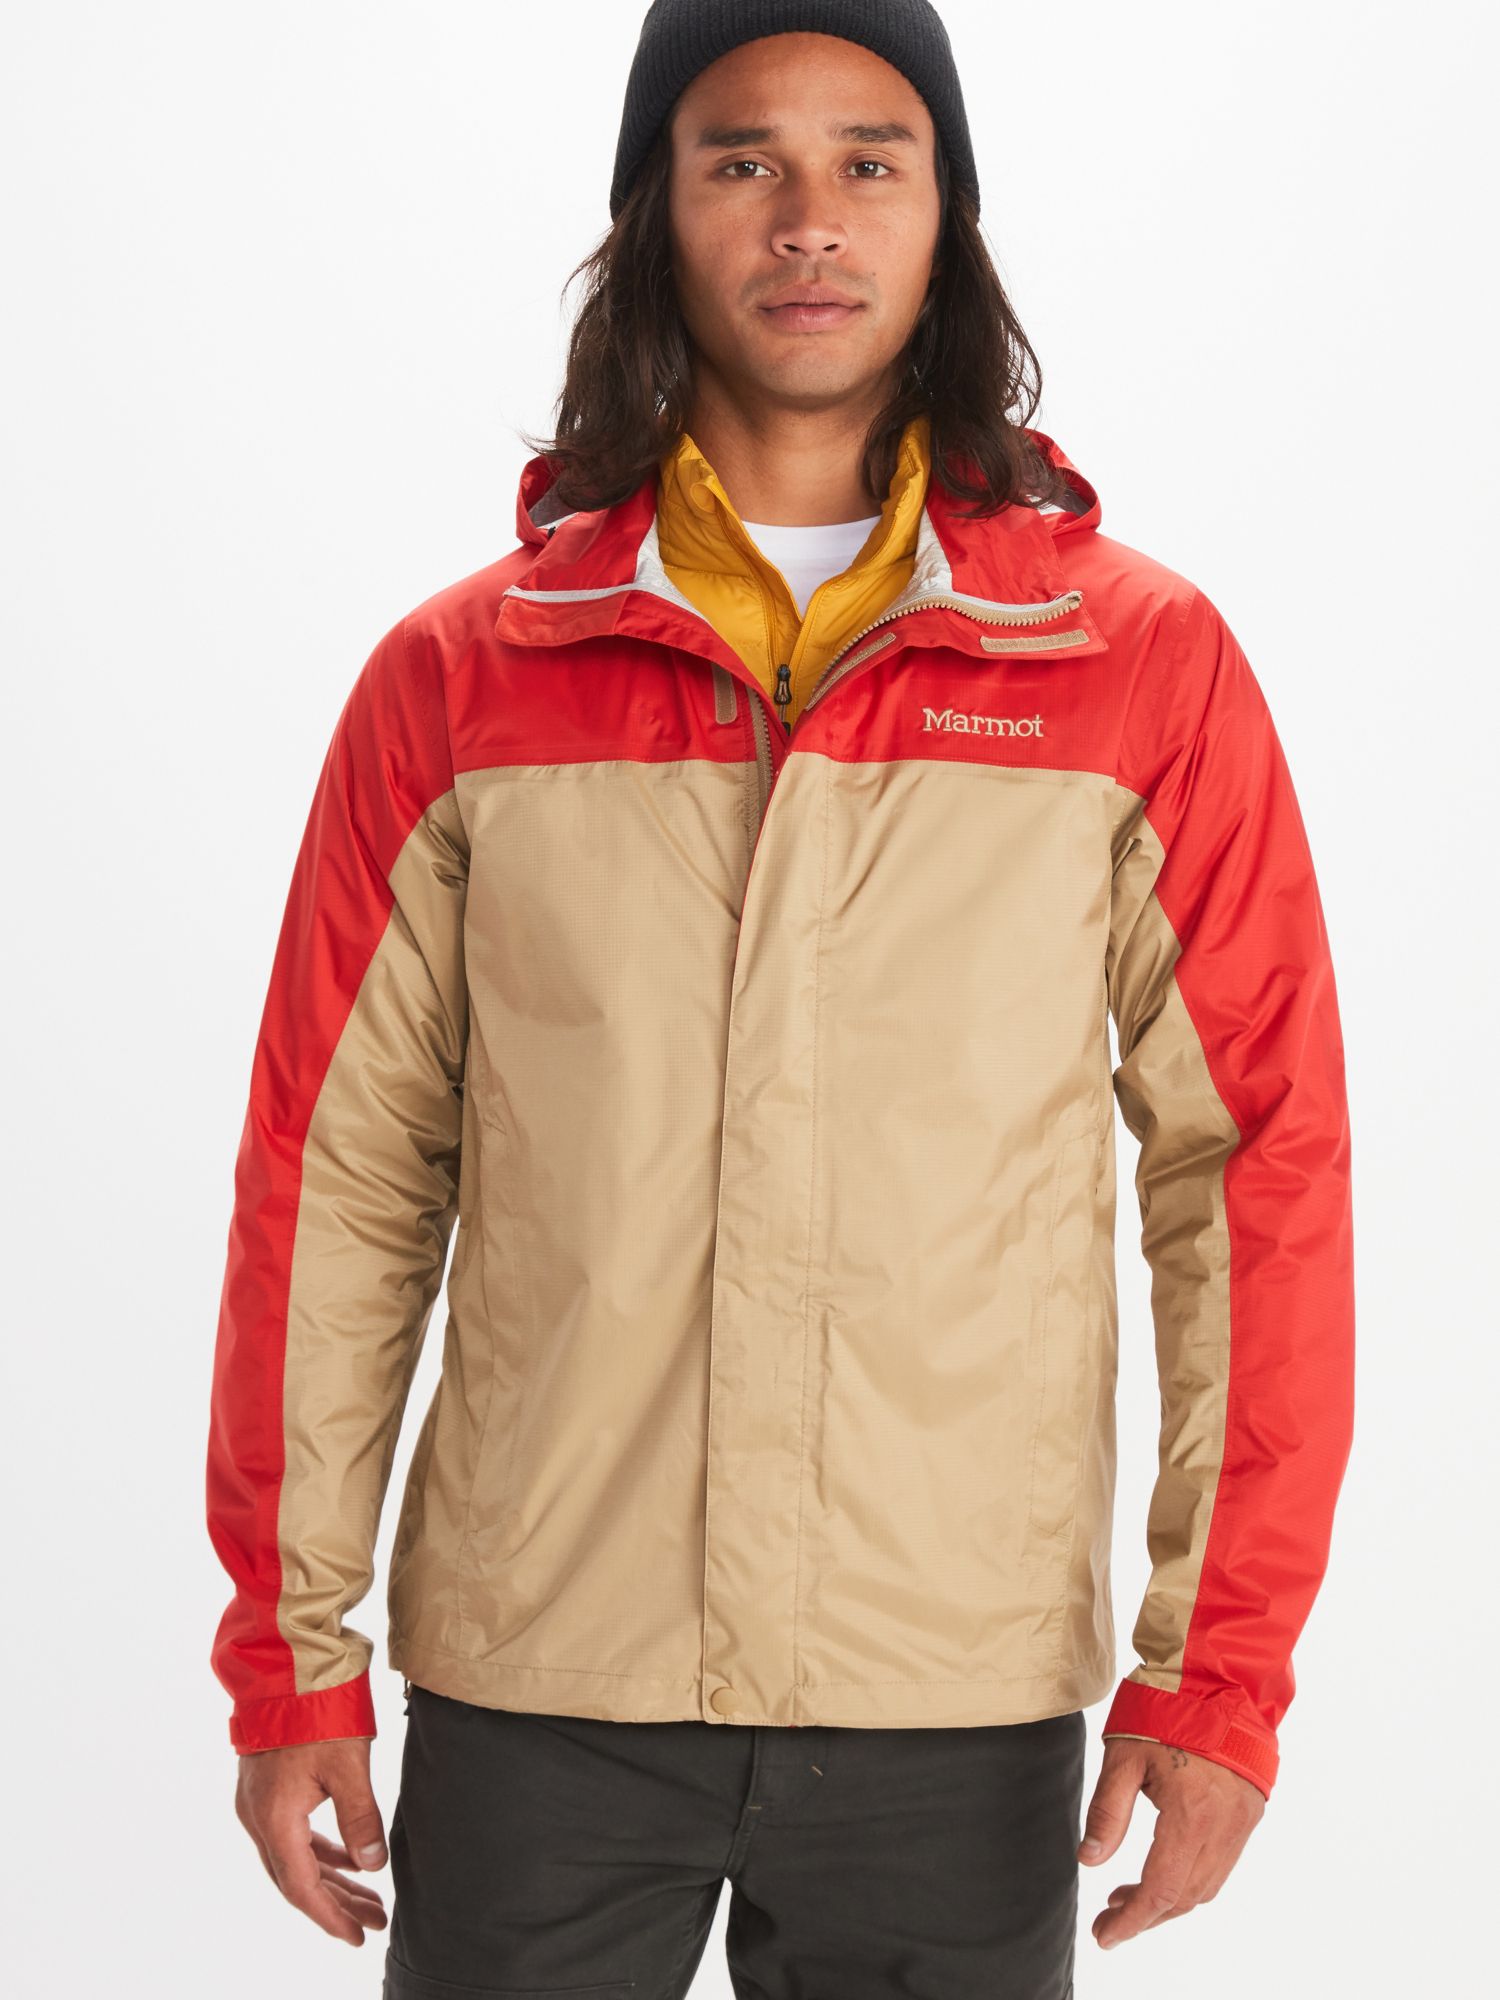 Raincoat Breathable Hardshell Rain Jacket L Marmot Mens PreCip Eco Jacket Windproof Black 2019 version Waterproof 